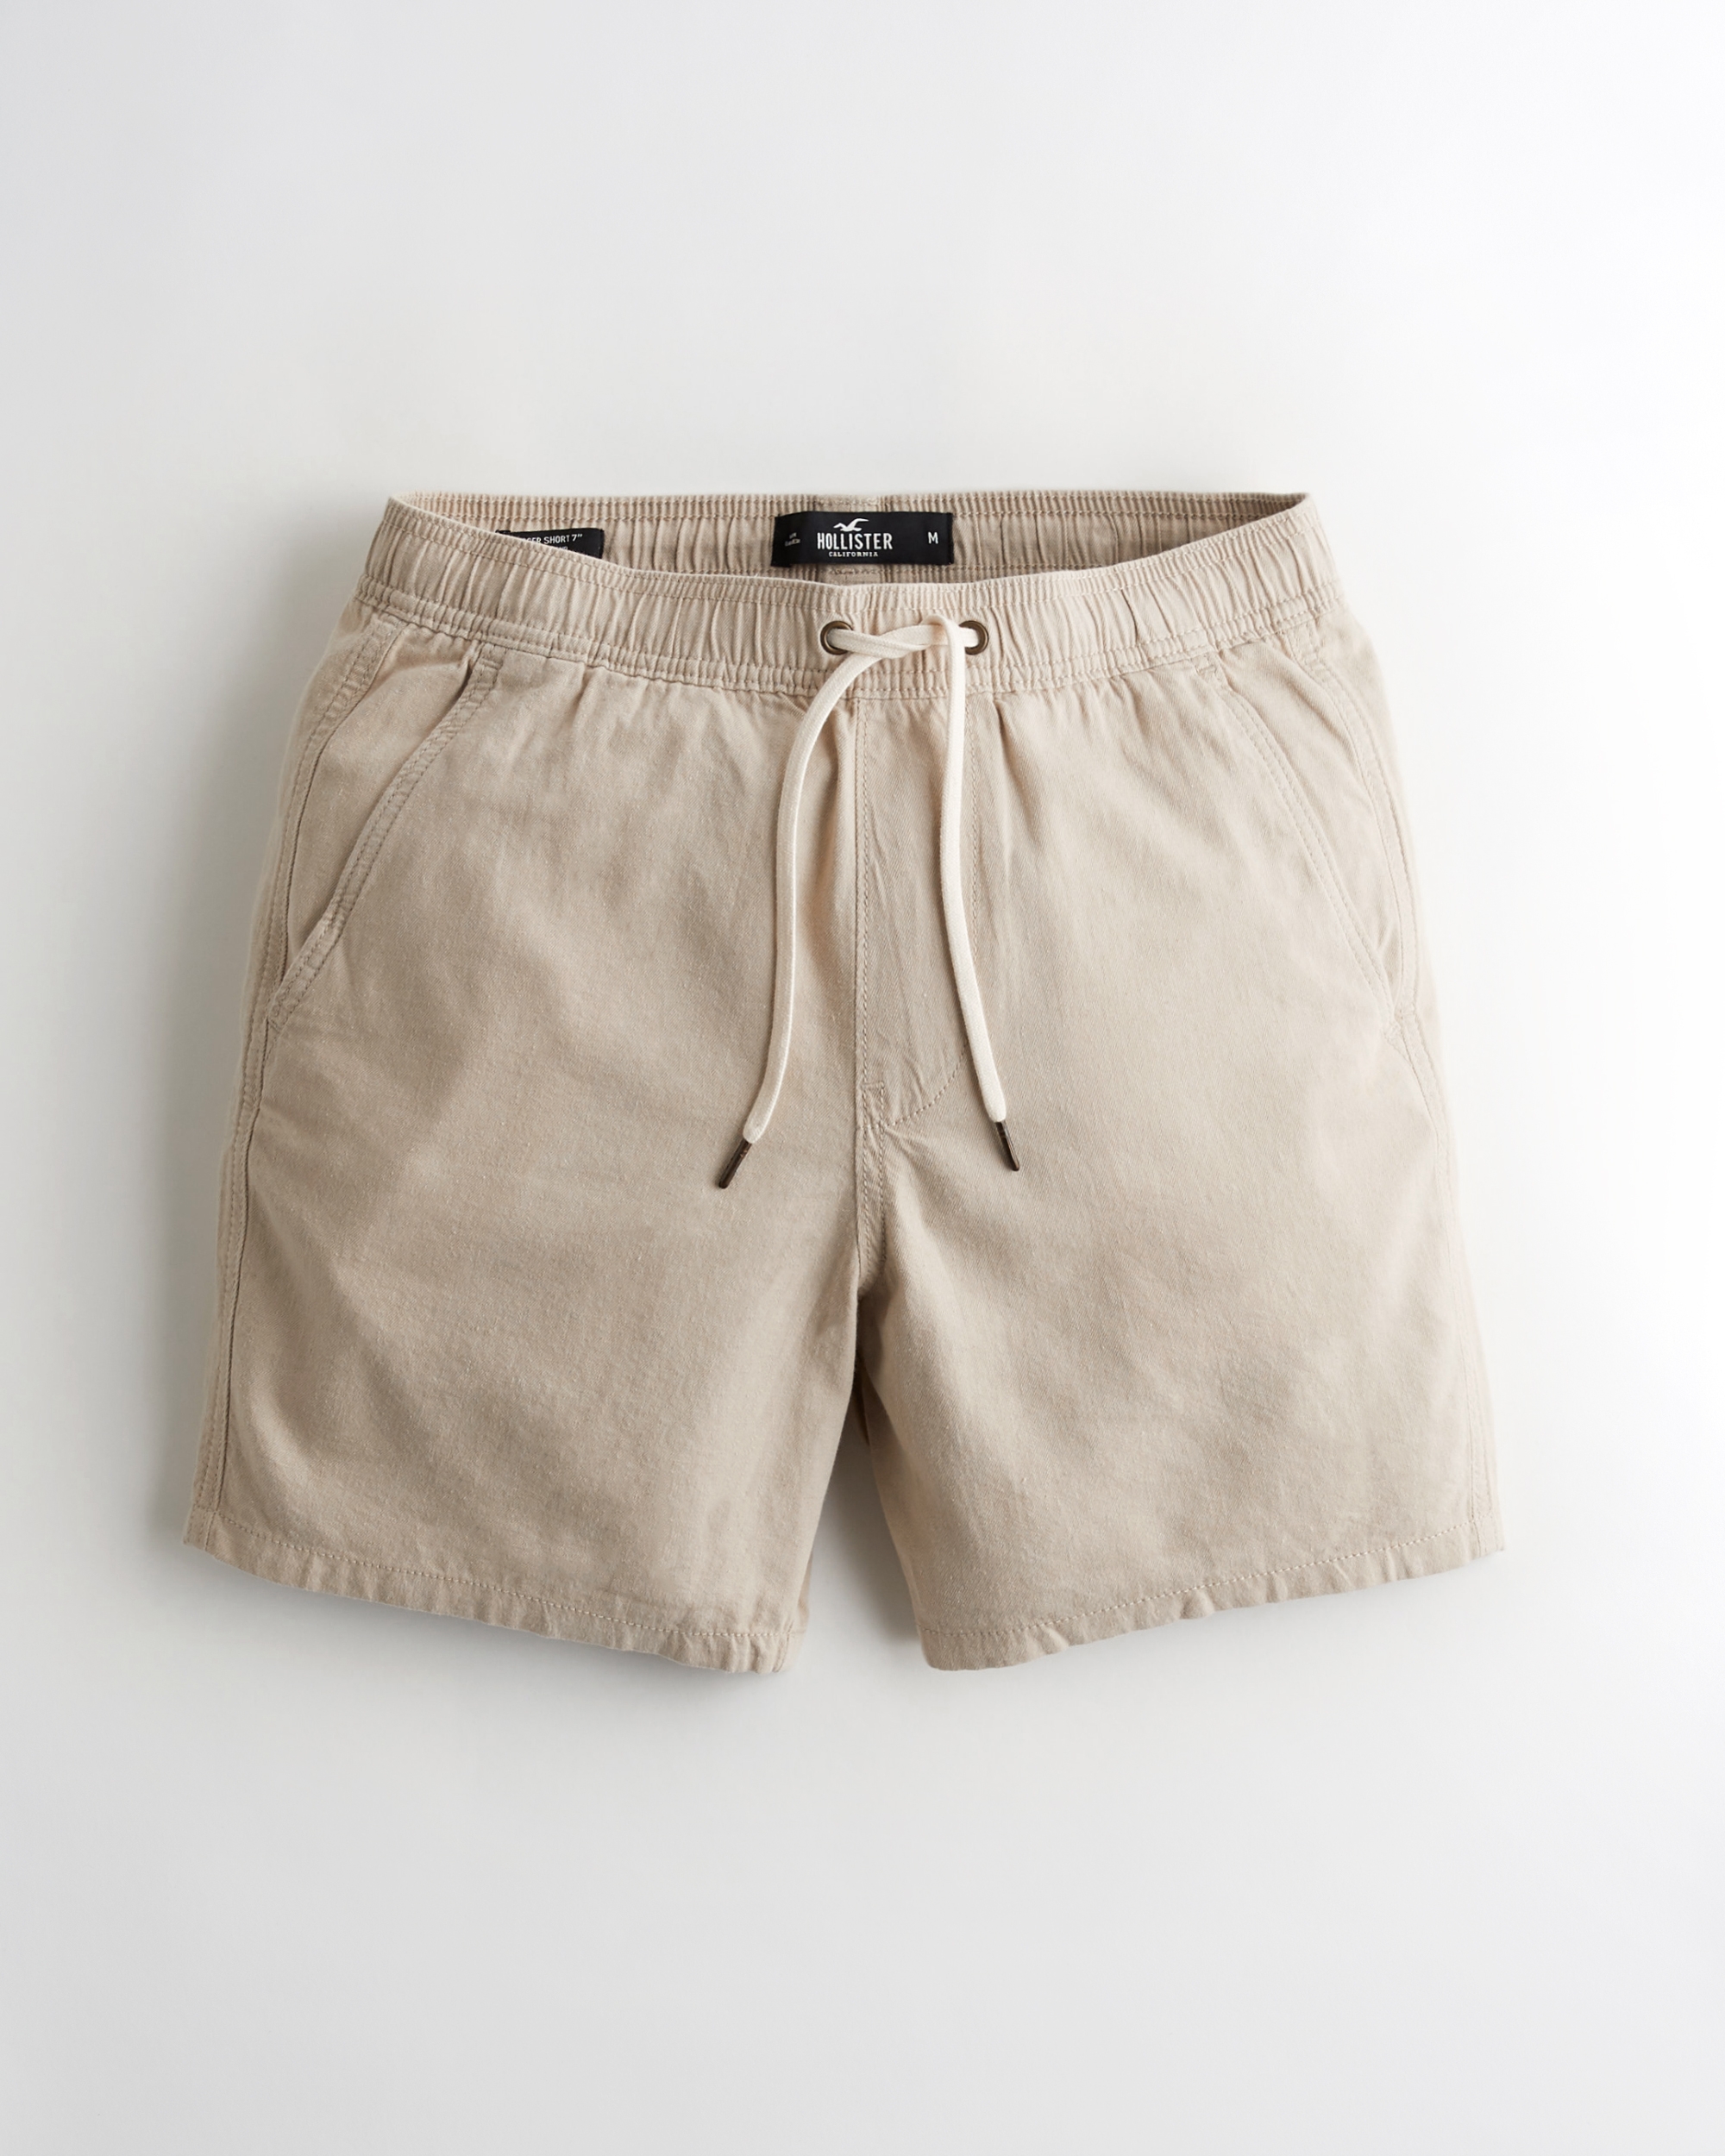 hollister shorts mens sale